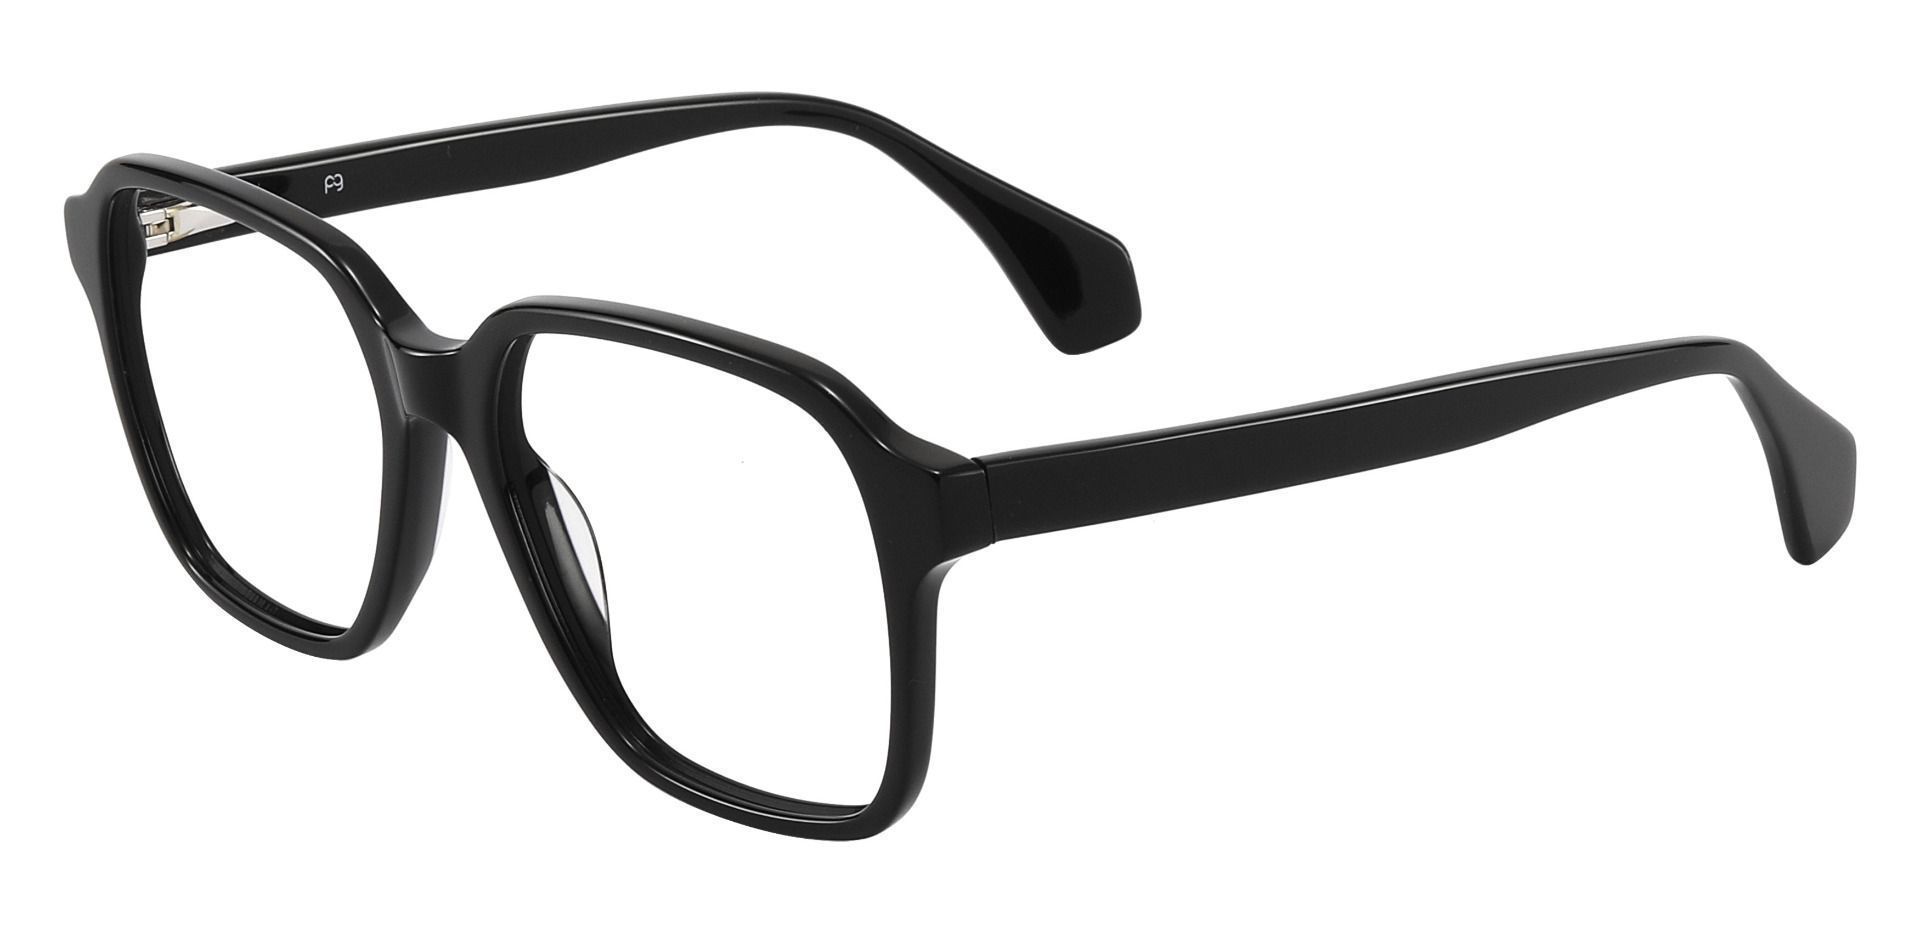 Renovo Square Eyeglasses Frame - Black